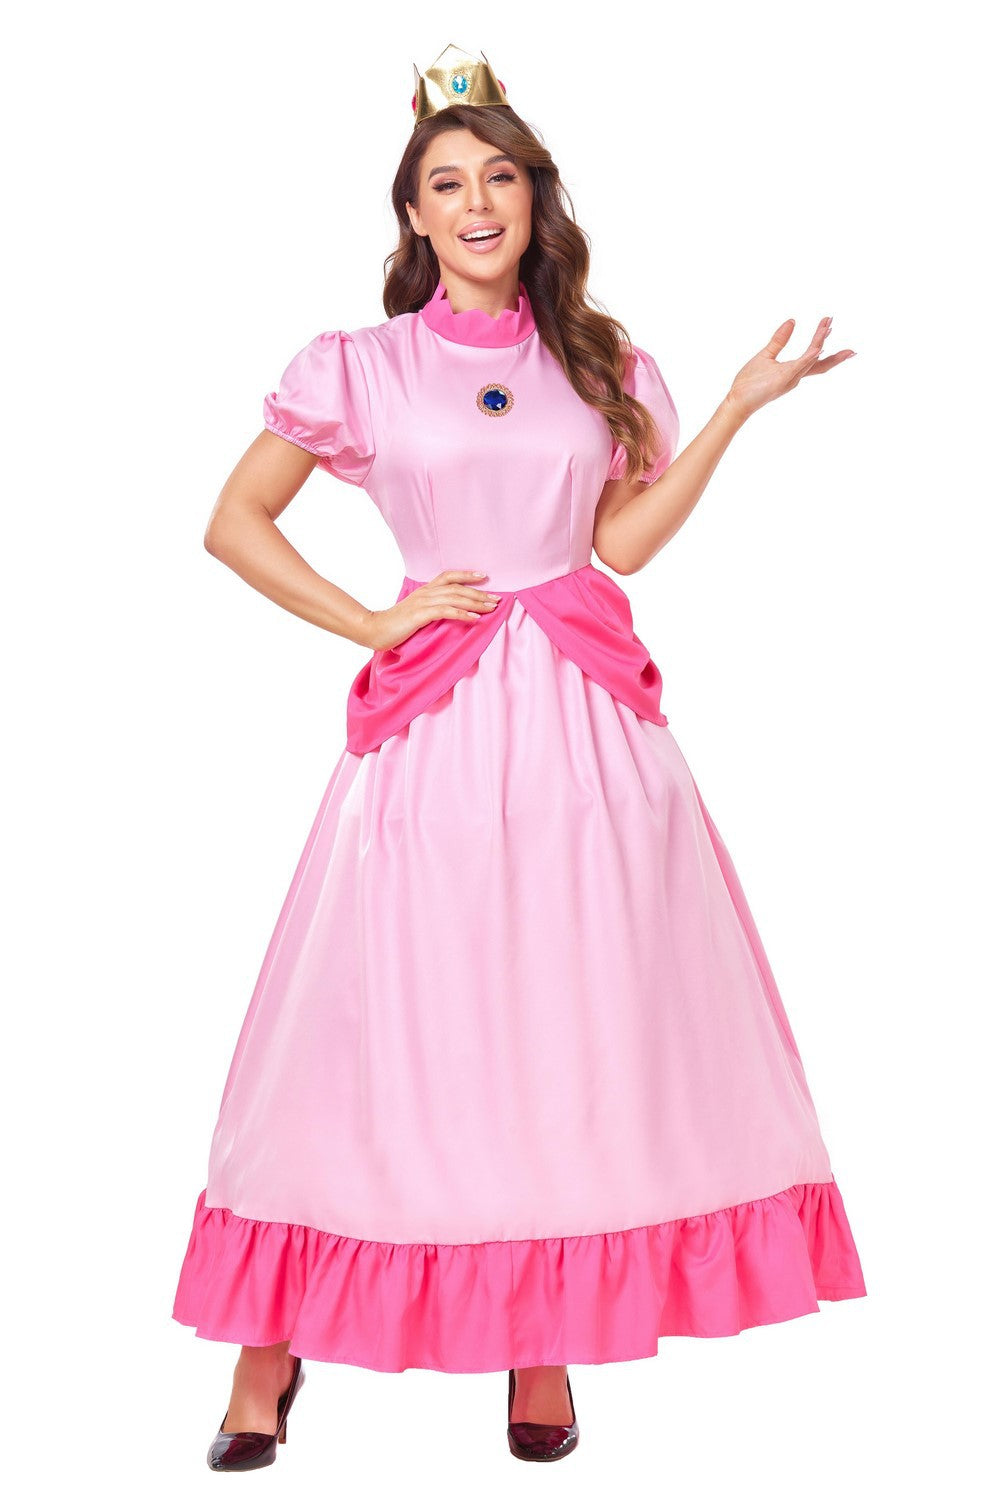 Princess Peach Dress Costume for Adult